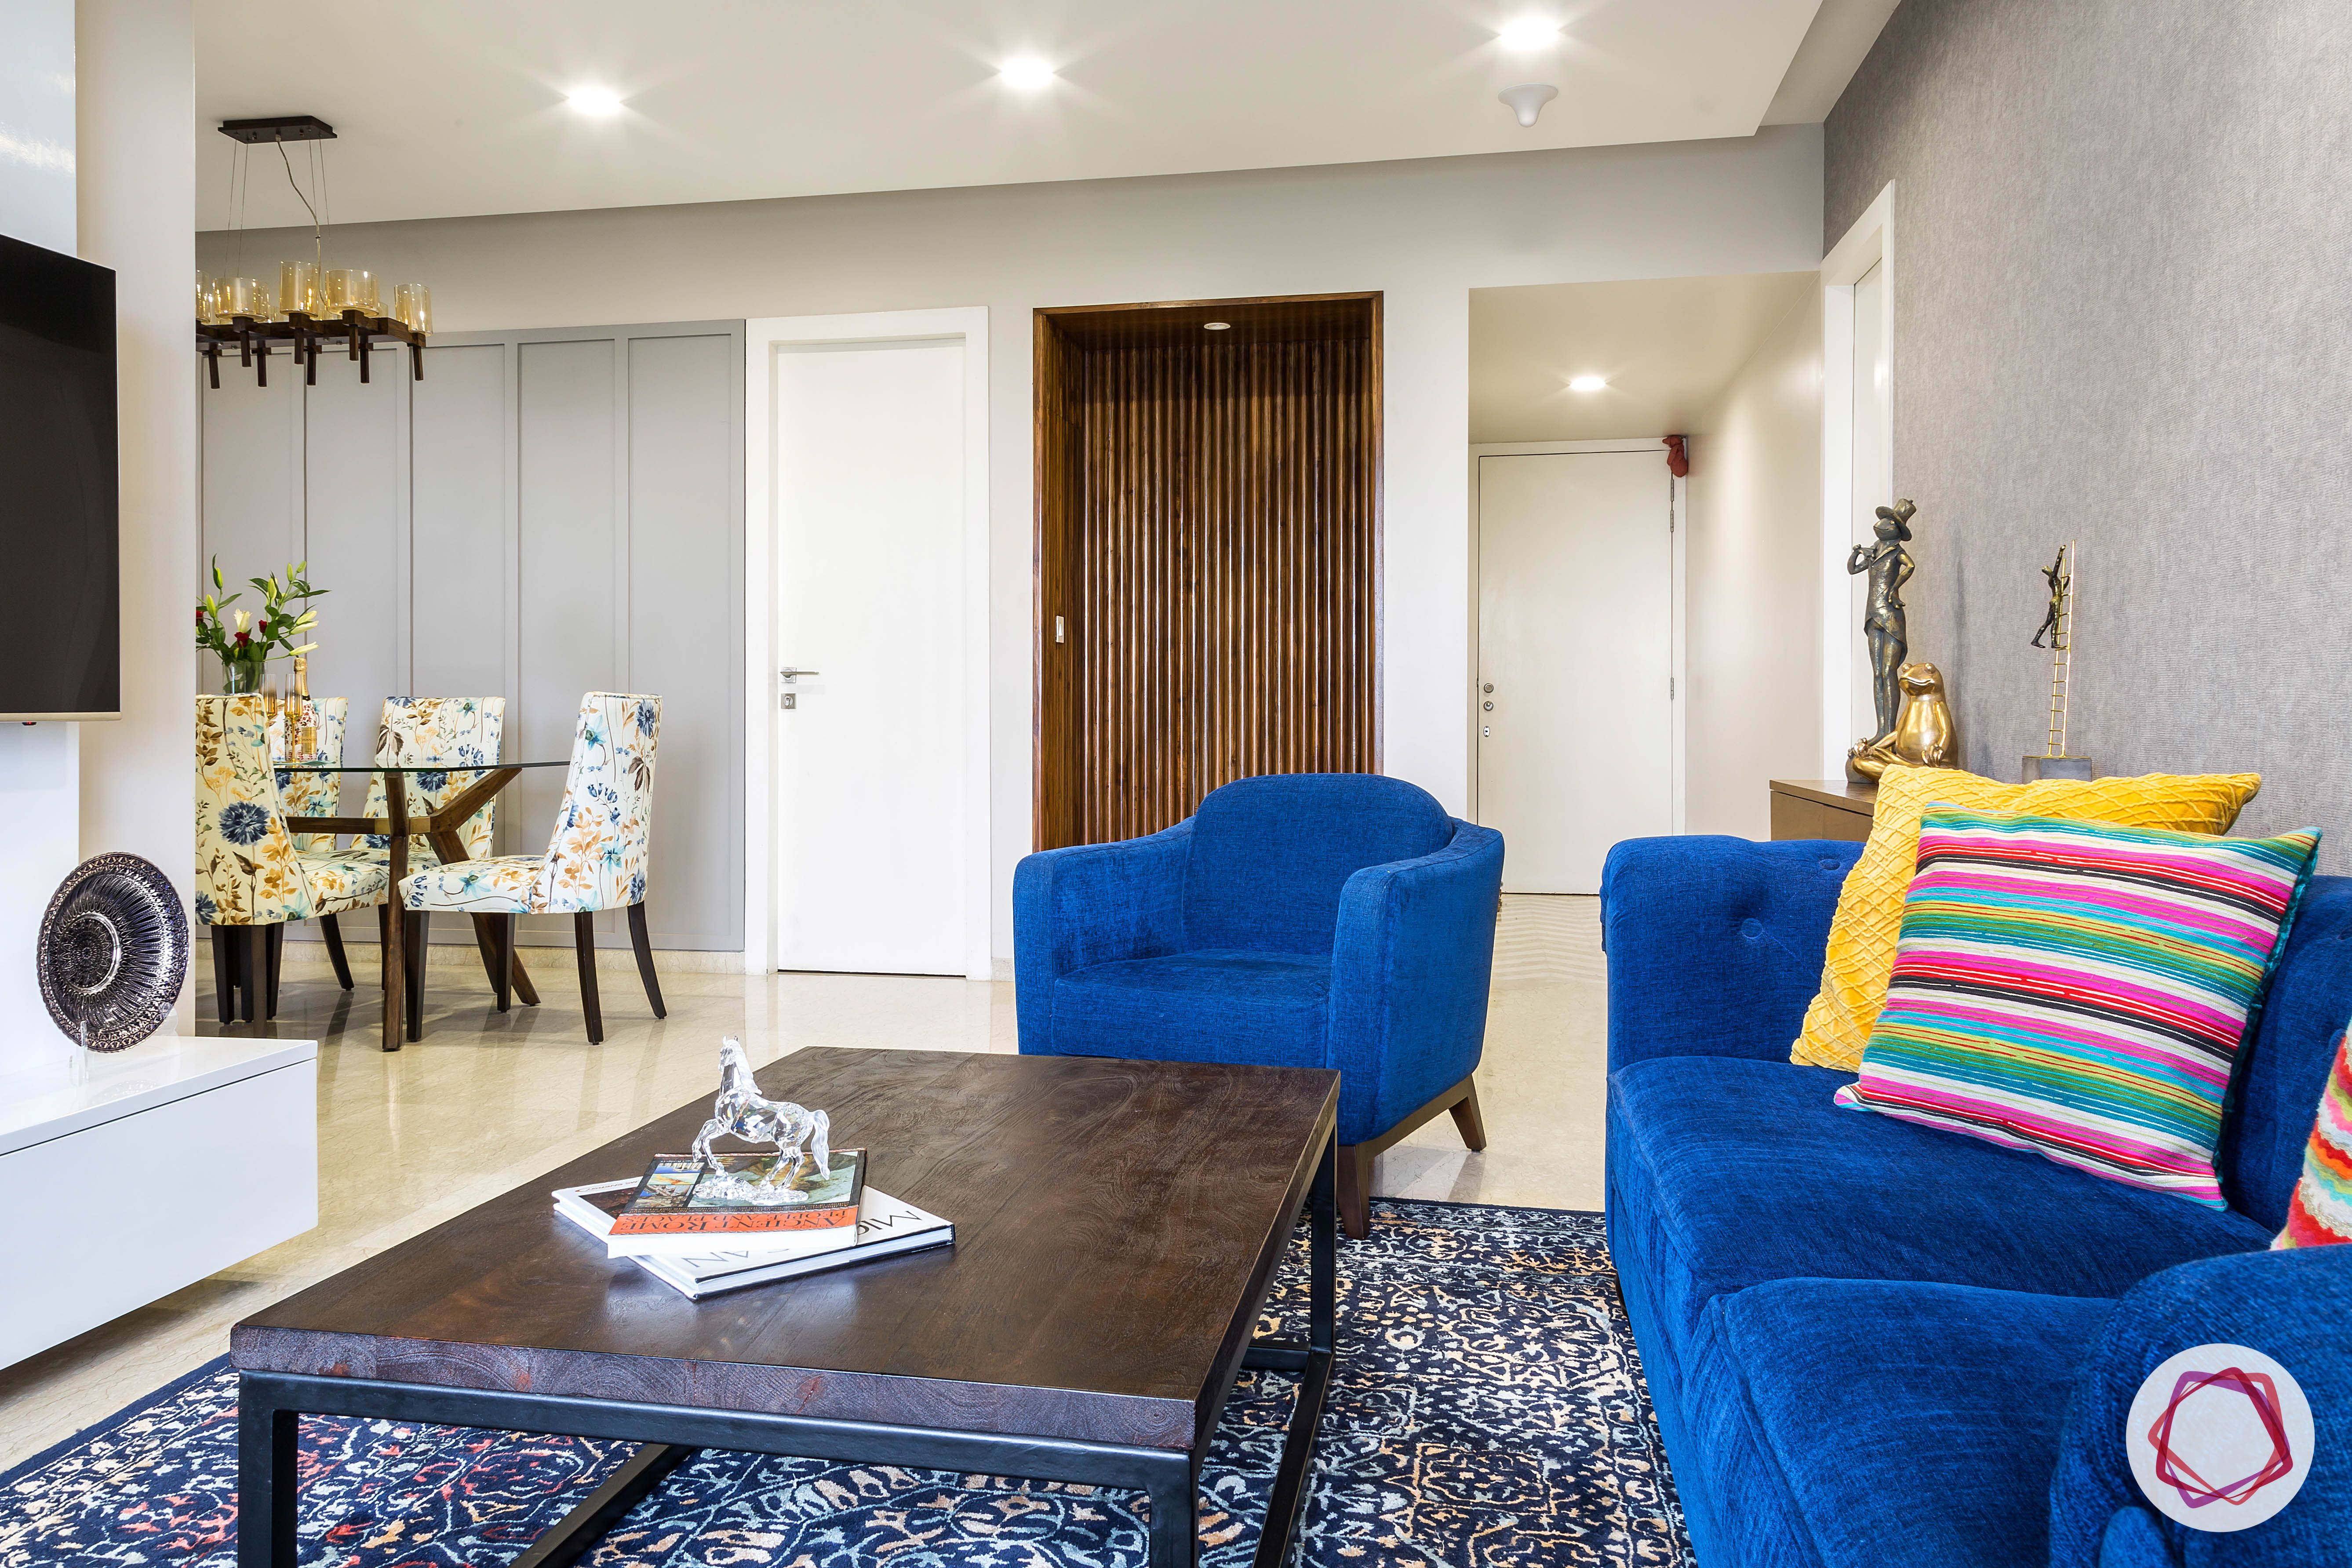 lodha group-living room designs-blue sofa designs-persian rug designs-veneer centre table